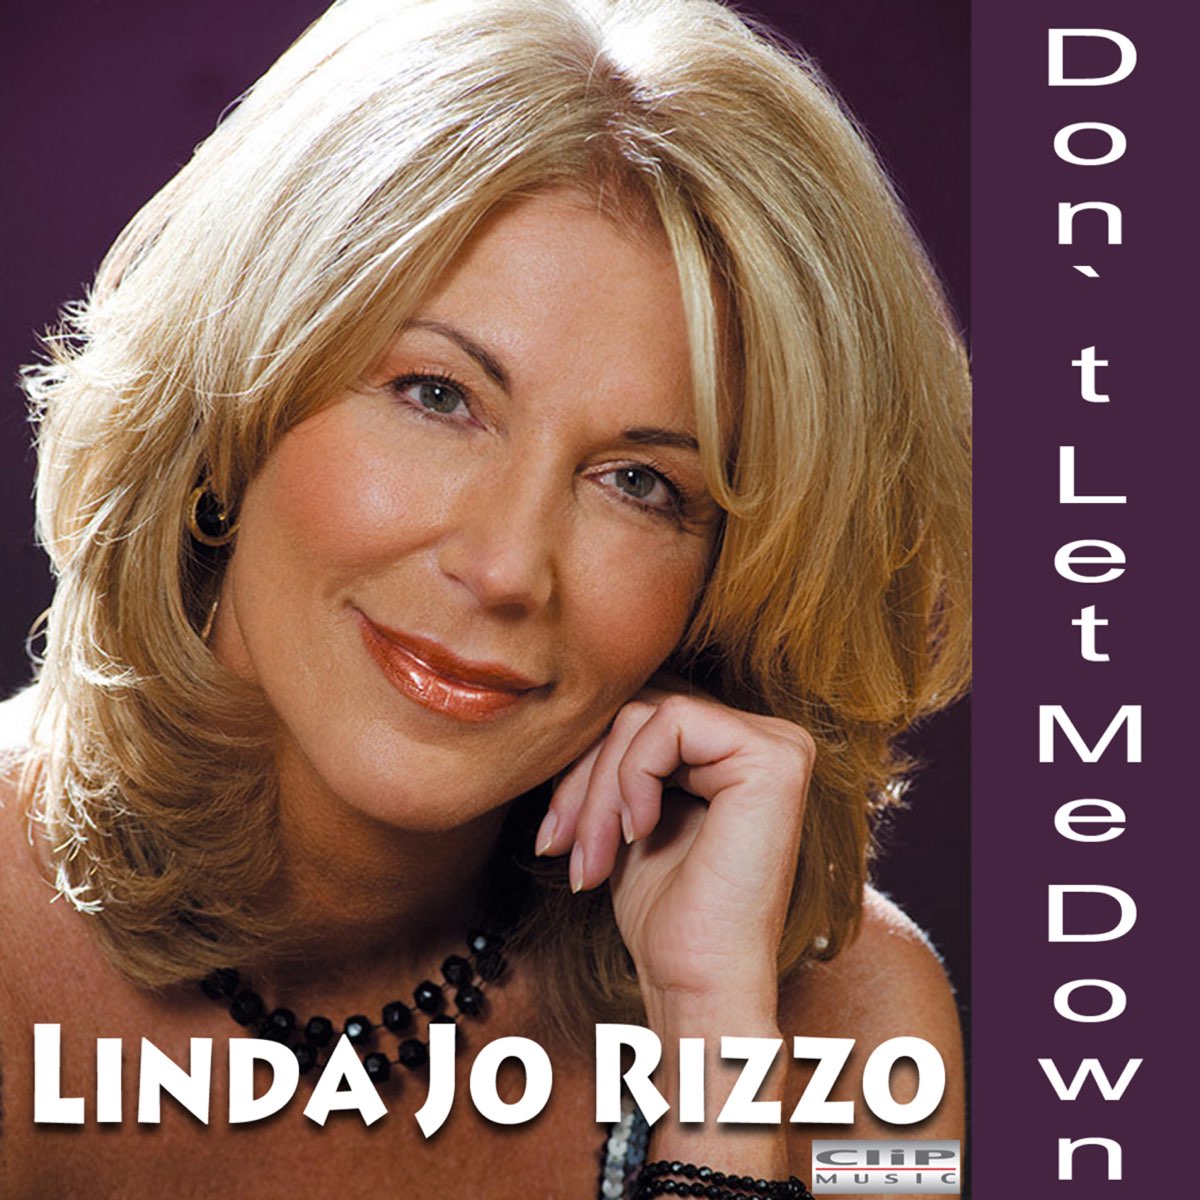 слушать, Don't Let Me Down - EP, Linda Jo Rizzo, музыка, синглы, песни...